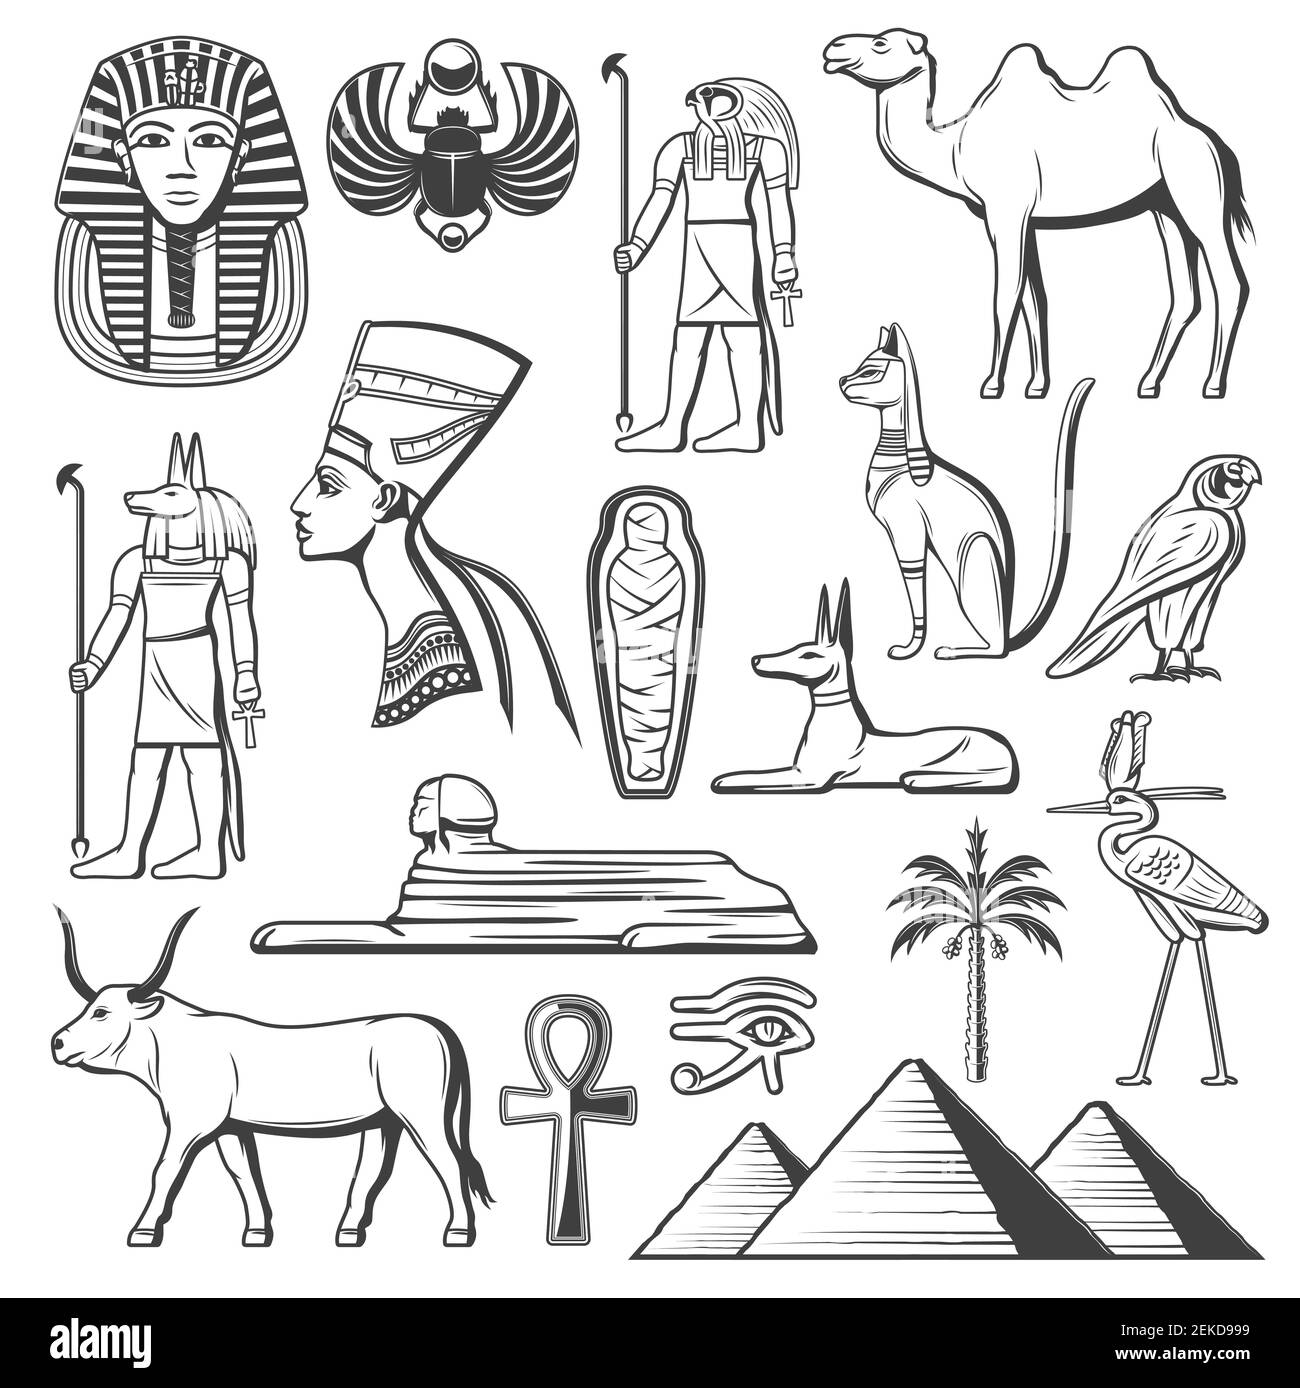 anubis and horus drawings